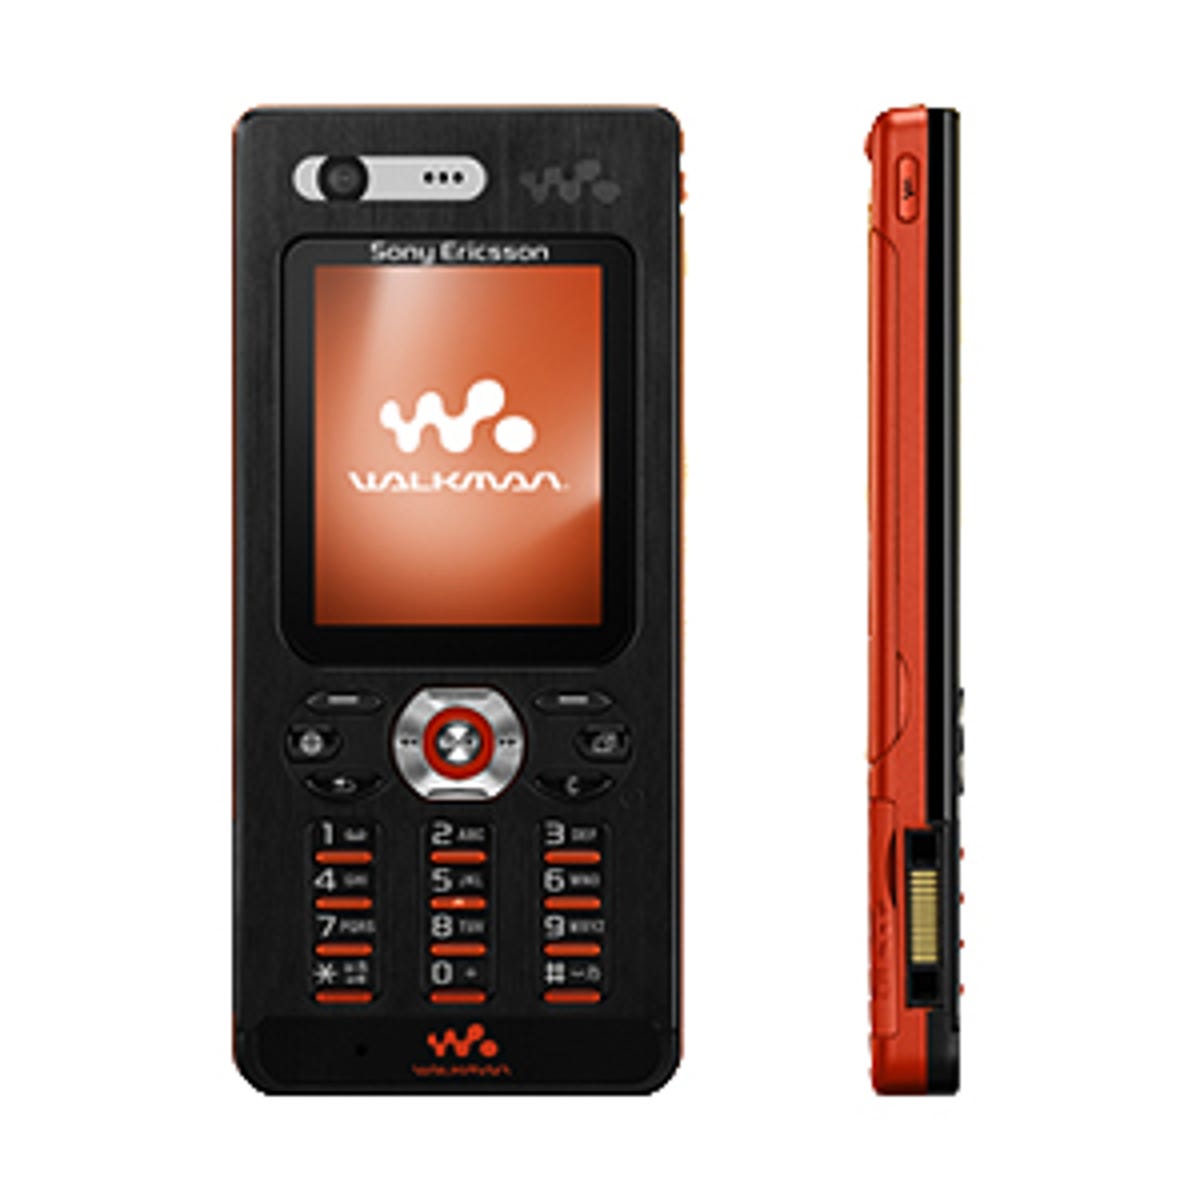 MobilePhoneMuseum on X: The Sony Ericsson W880i. Released in